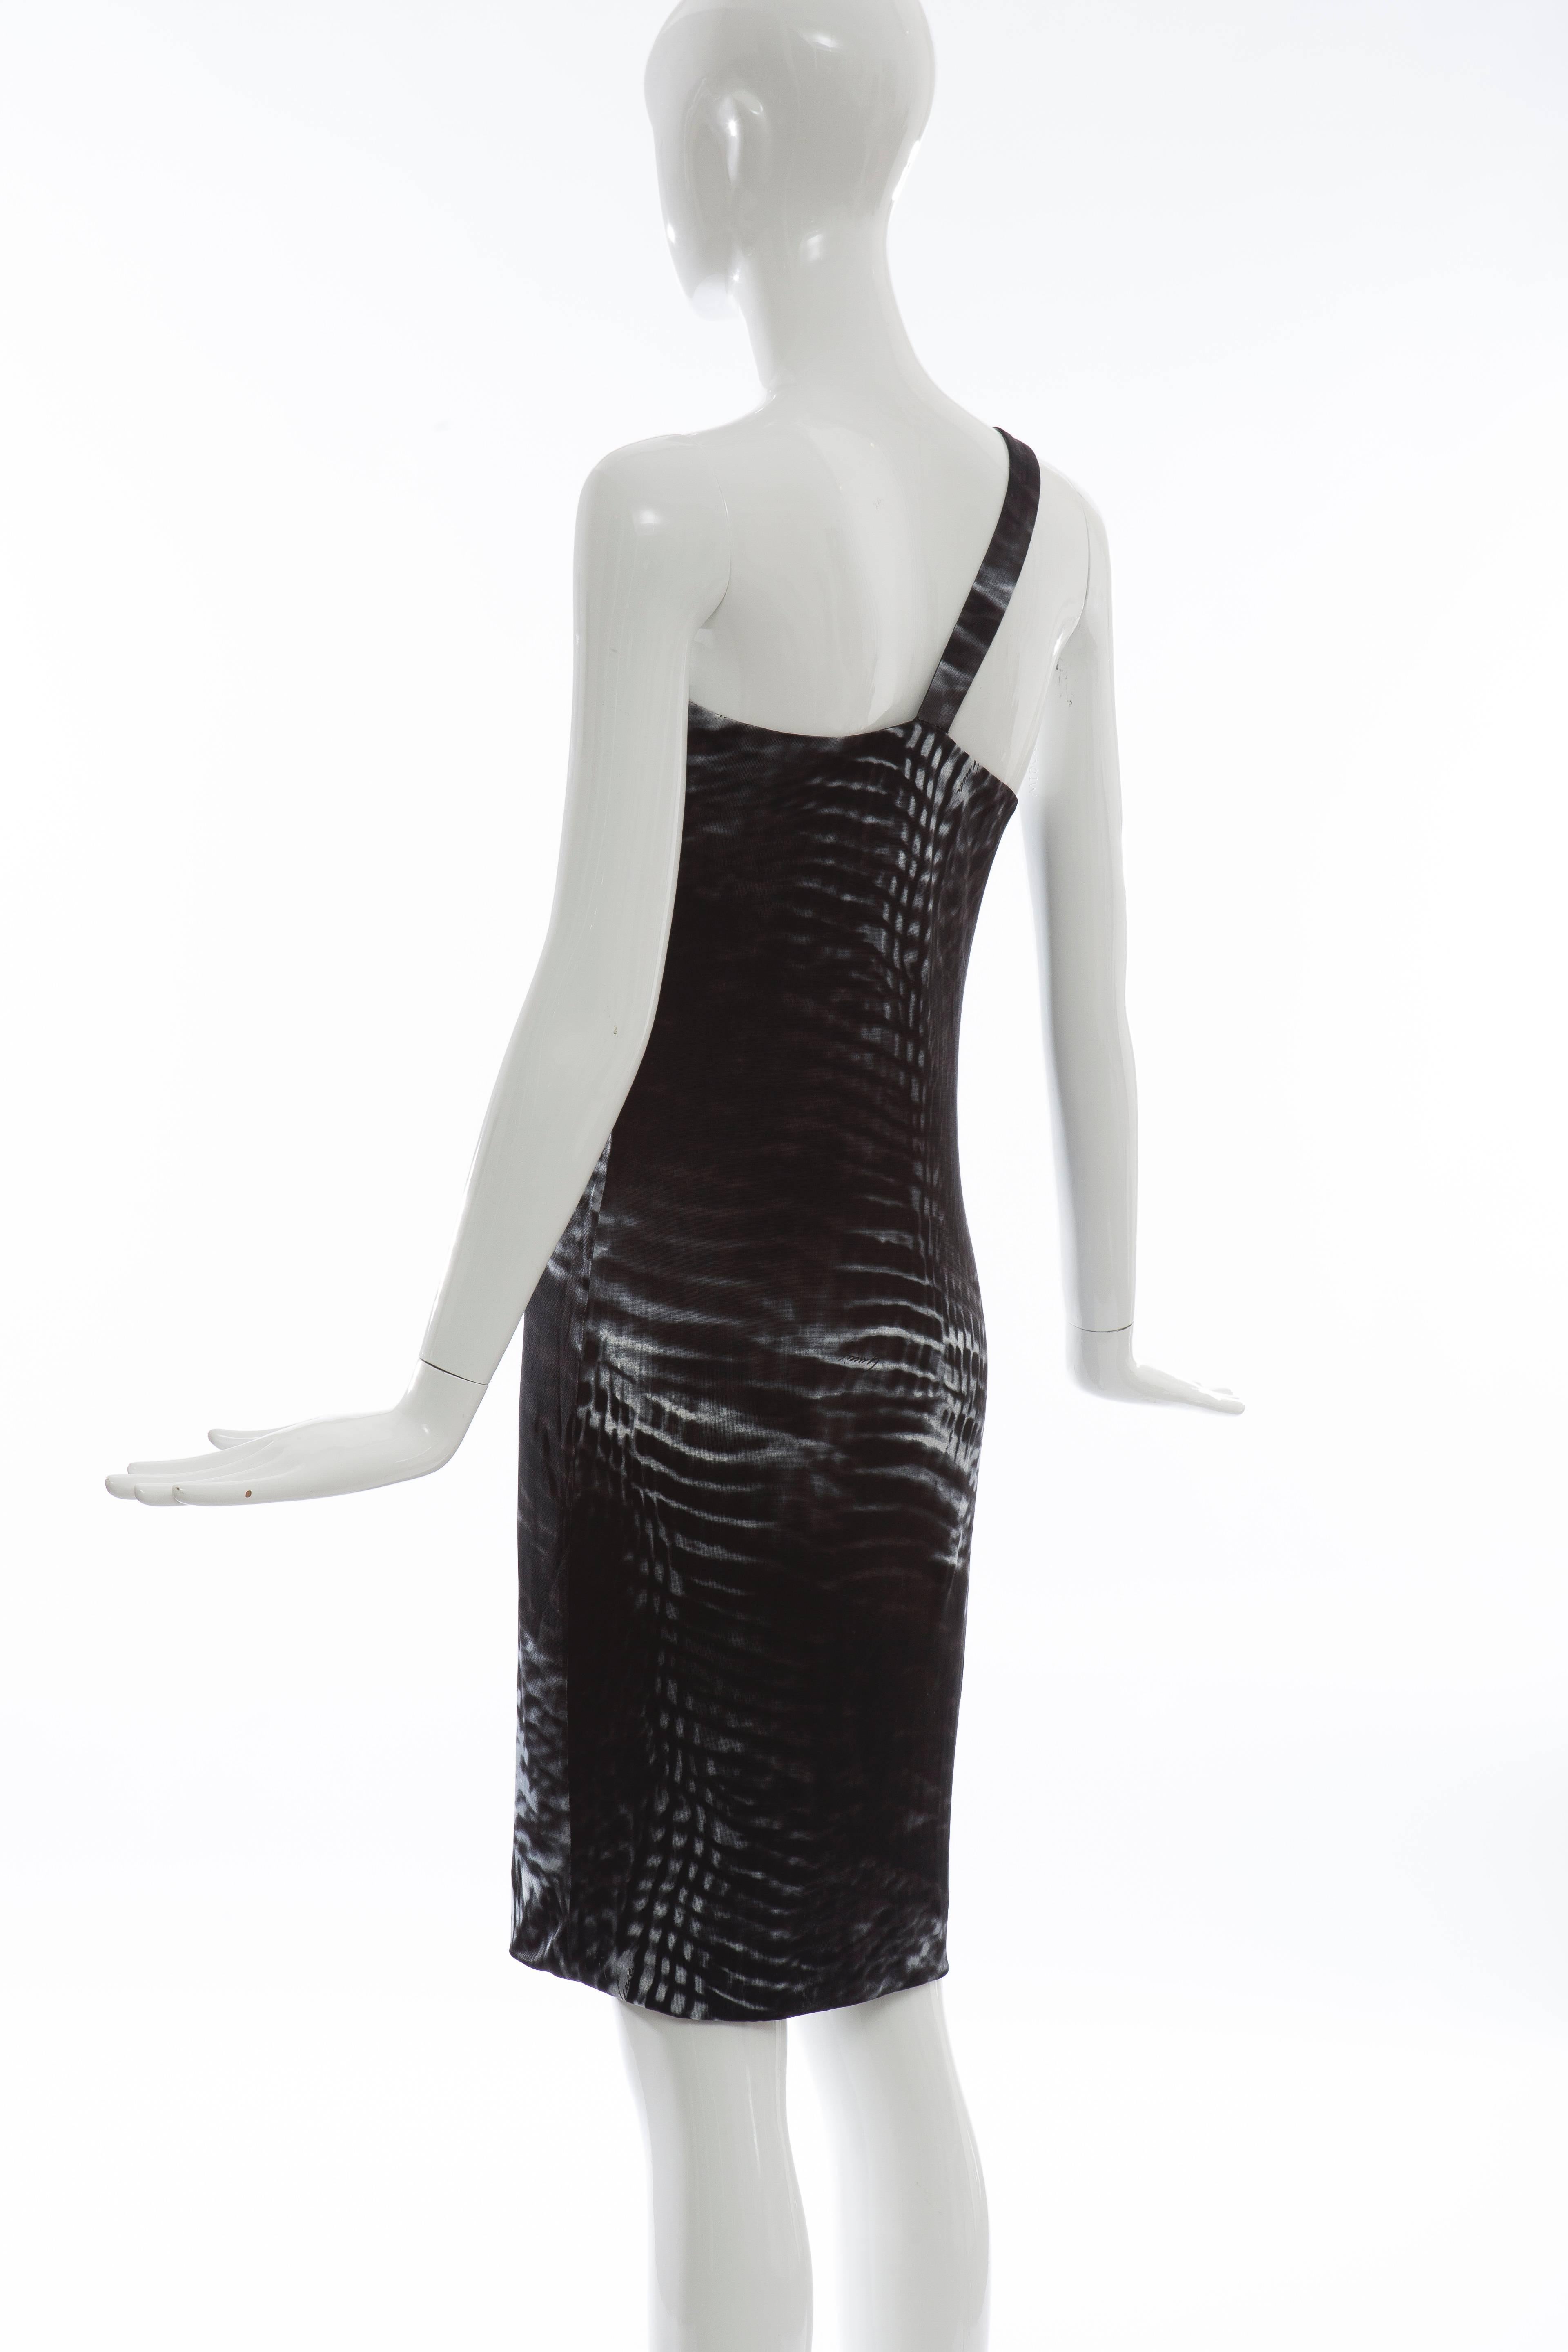 Tom Ford for Gucci Runway Black One-Shoulder Printed Dress , Spring 2000 For Sale 4